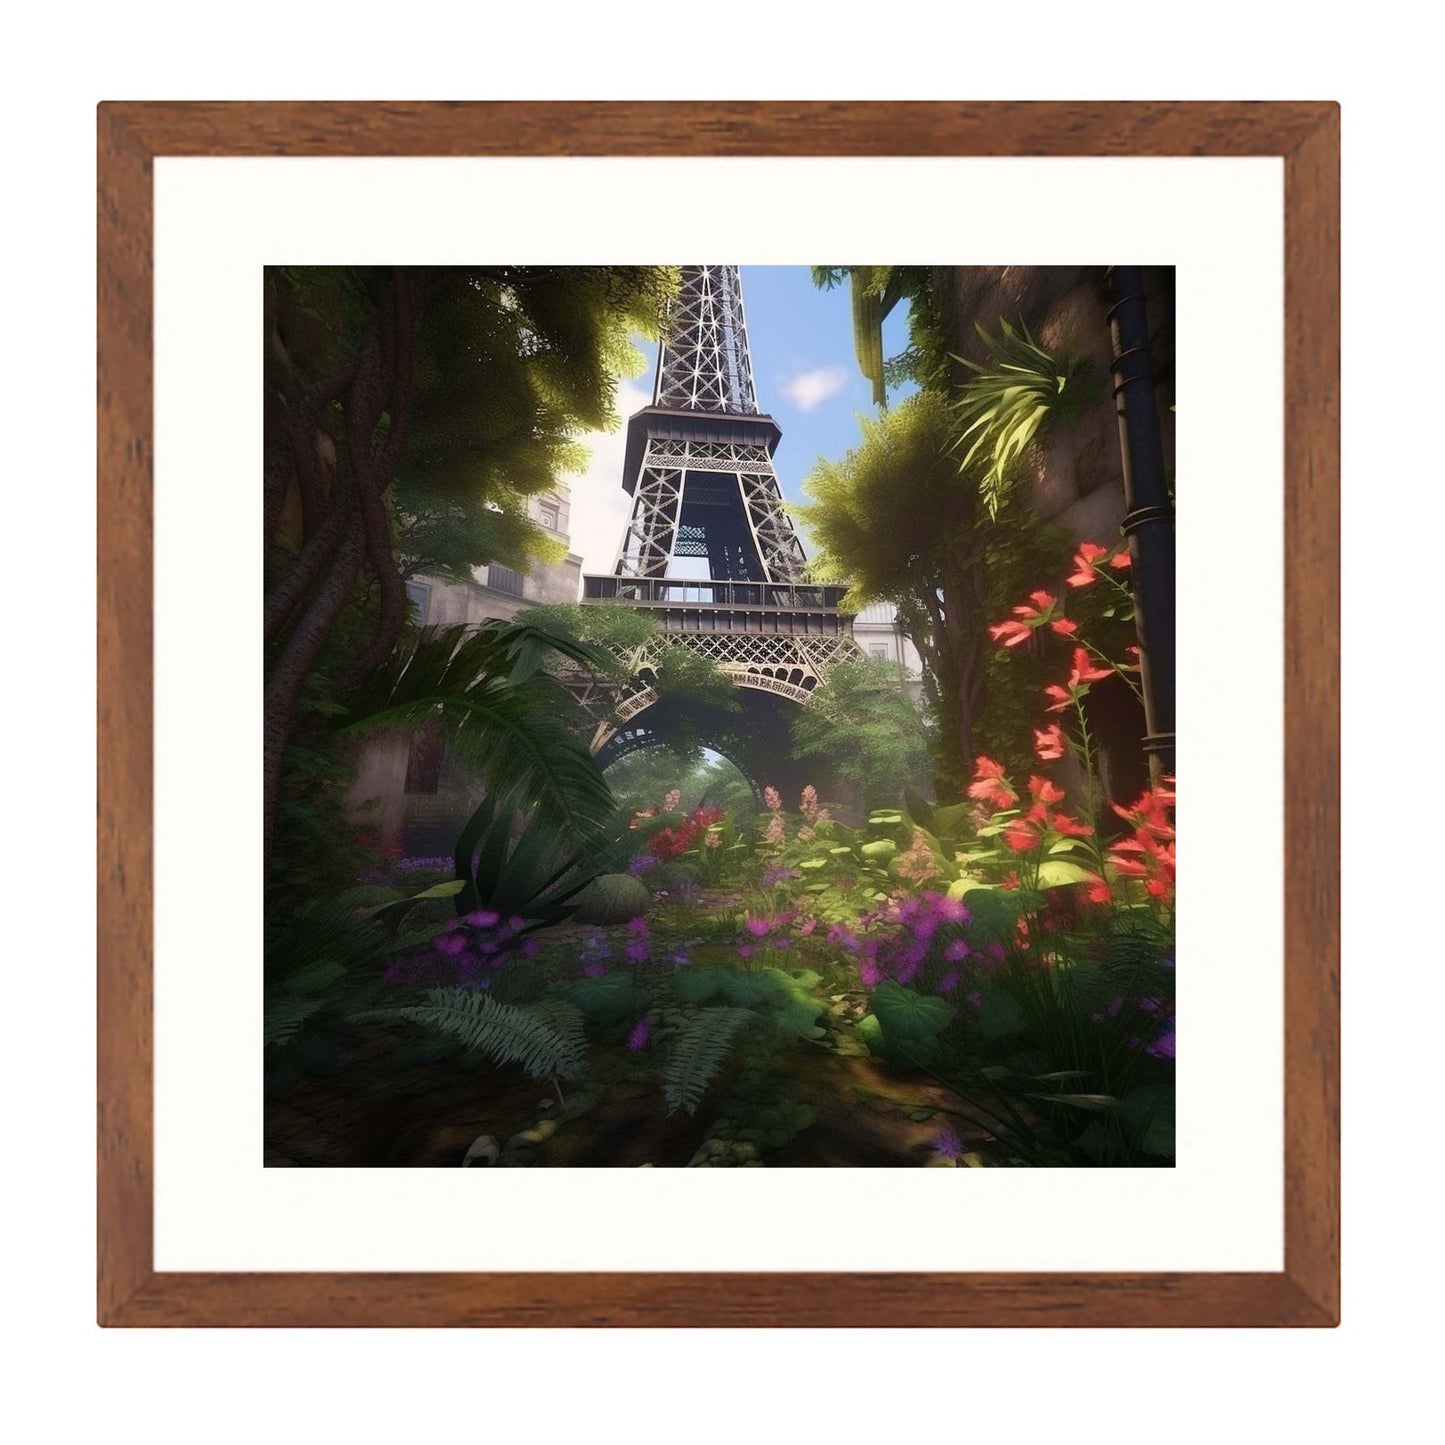 Paris Eiffelturm - Wandbild in der Stilrichtung Urban Jungle